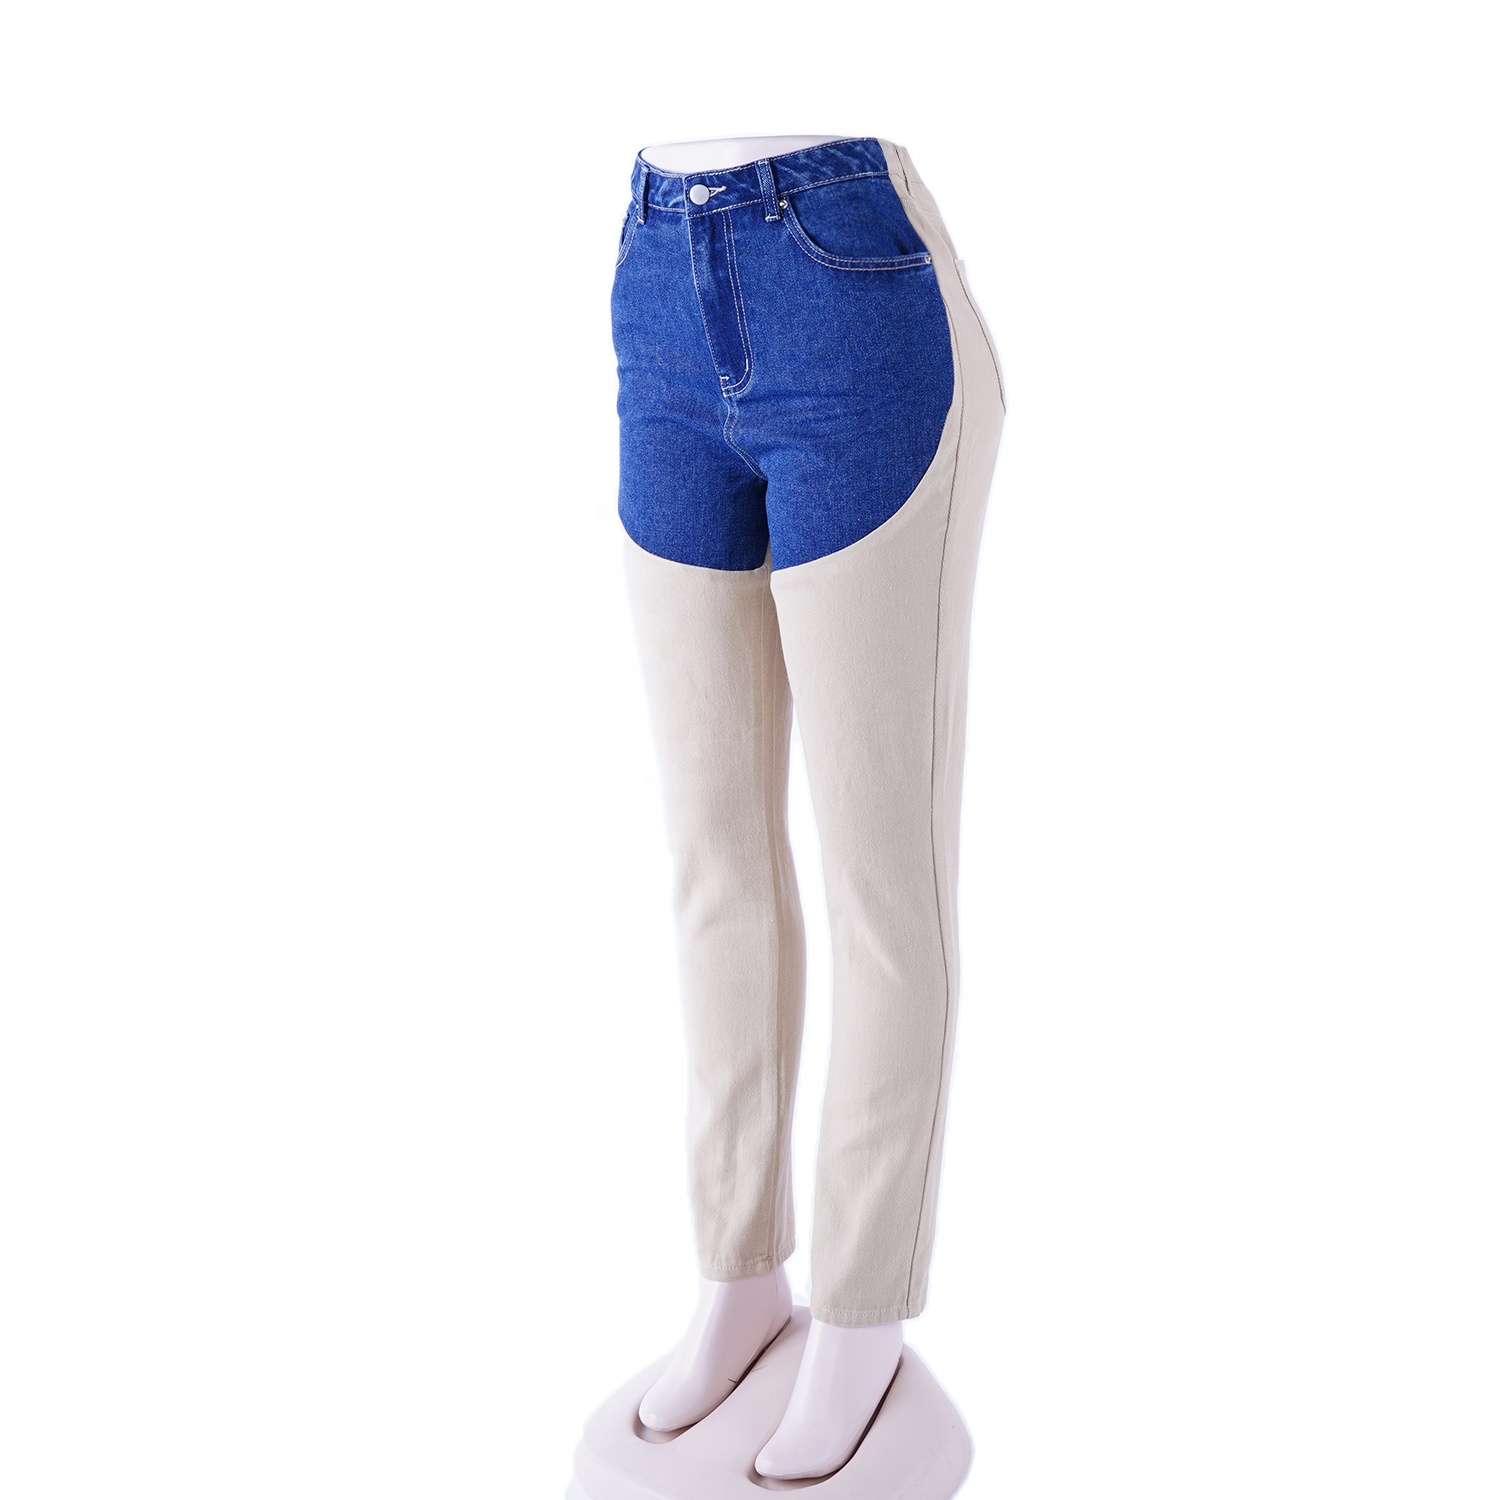 SKYKINGDOM OEM service women jeans denim cotton customize designed two tones skinny high waist jeans for women